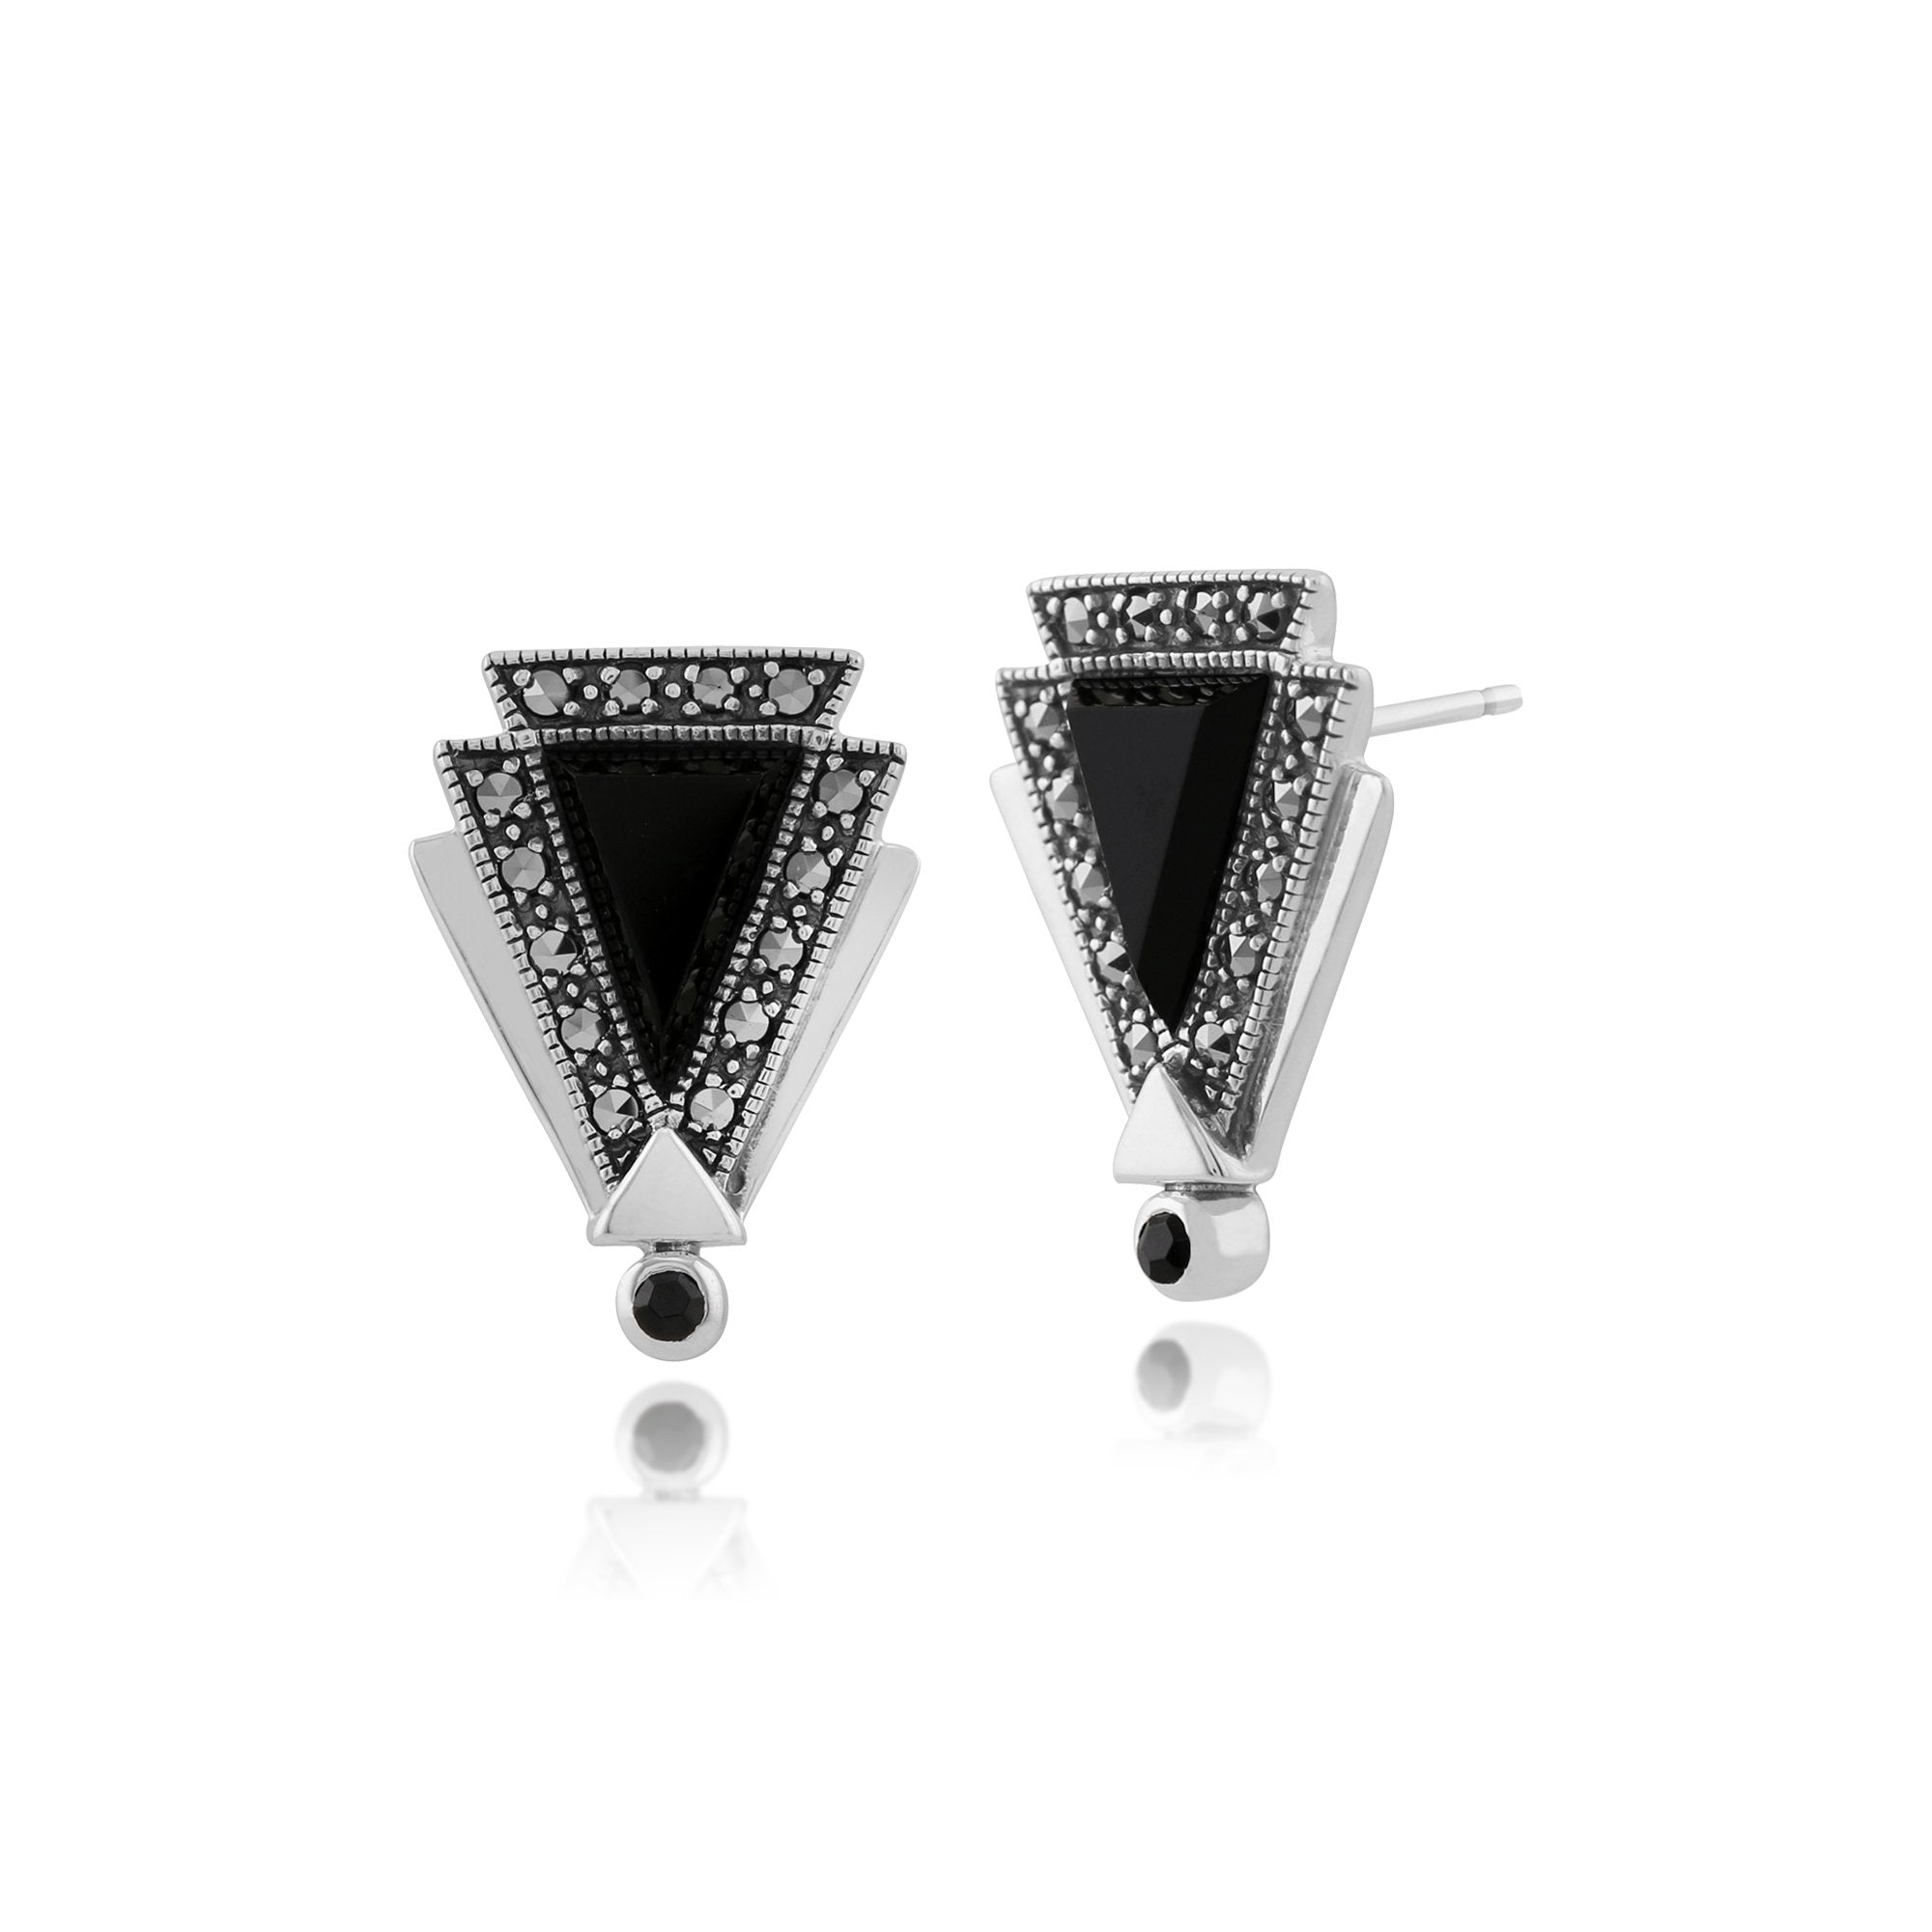 Art Deco Style Black Onyx, Marcasite & Black Spinel Triangle Stud Earrings in Sterling Silver